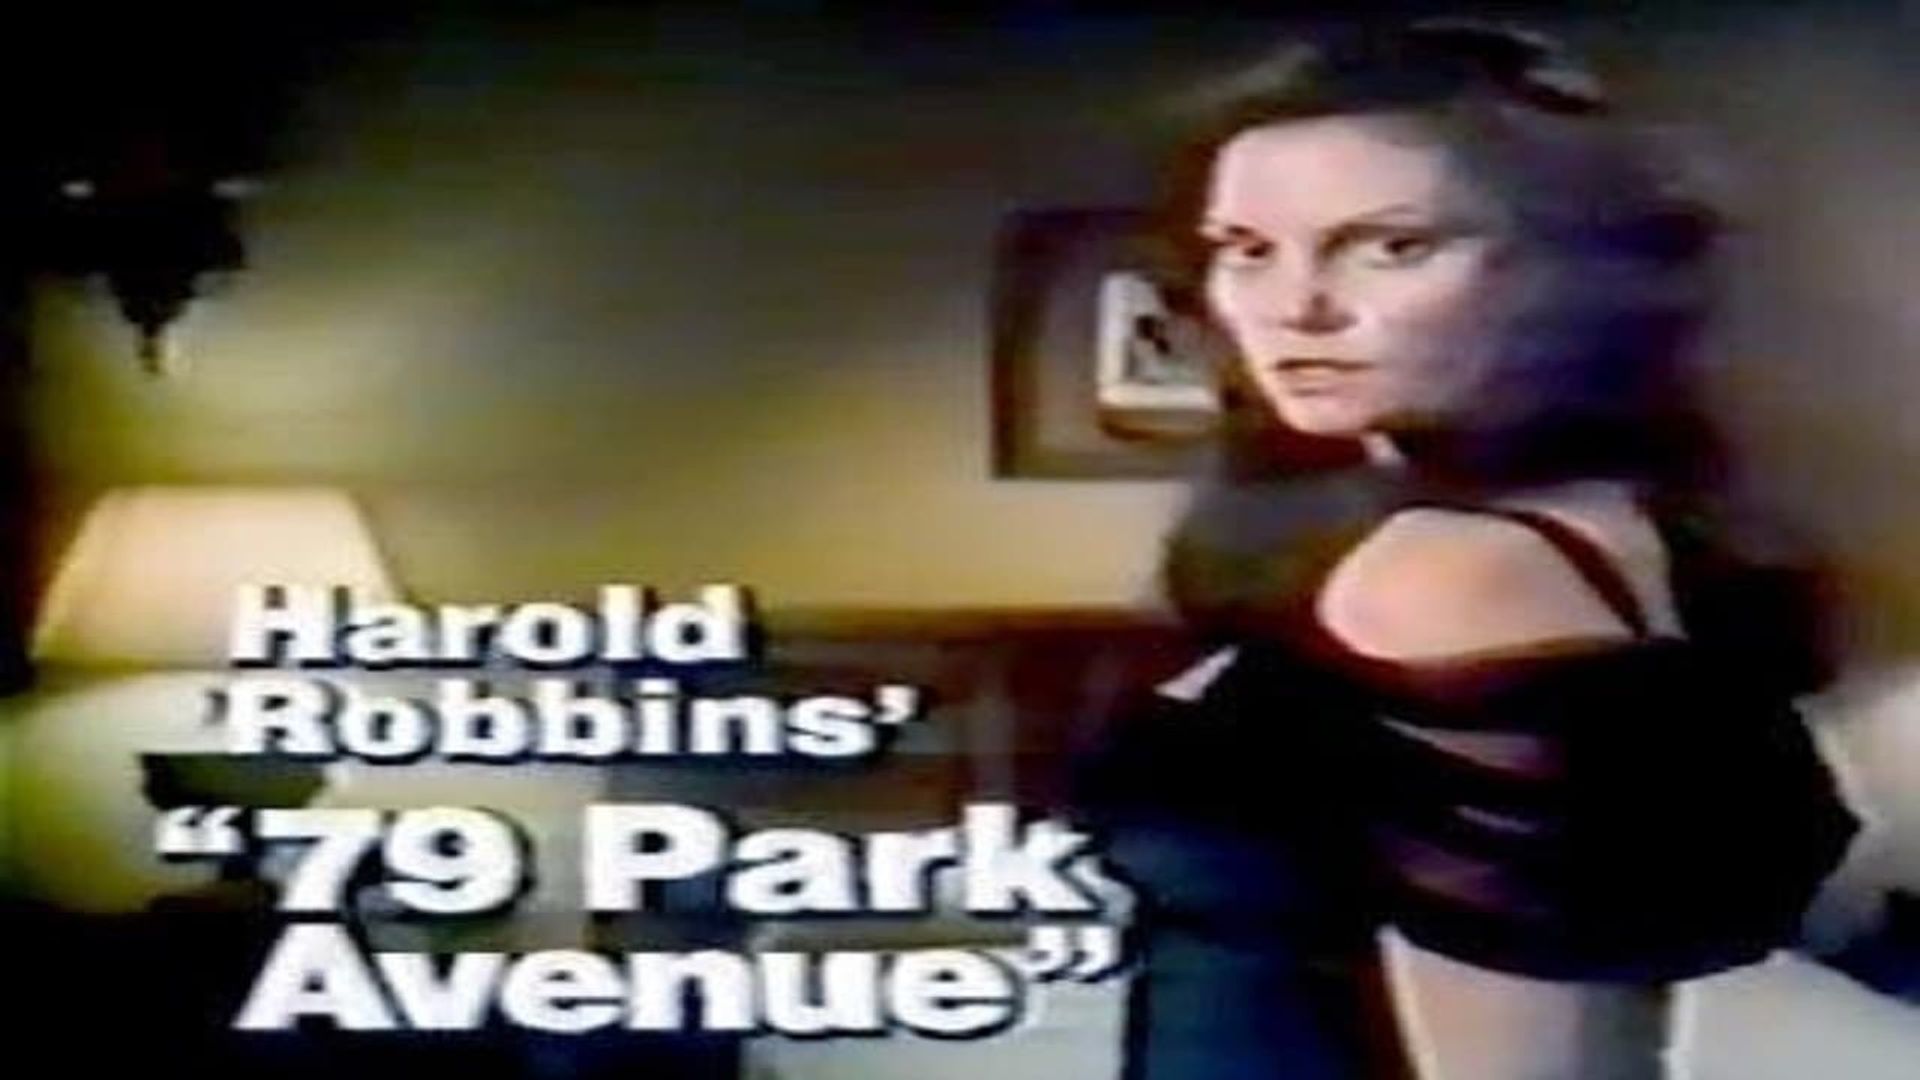 Harold Robbins' 79 Park Avenue background